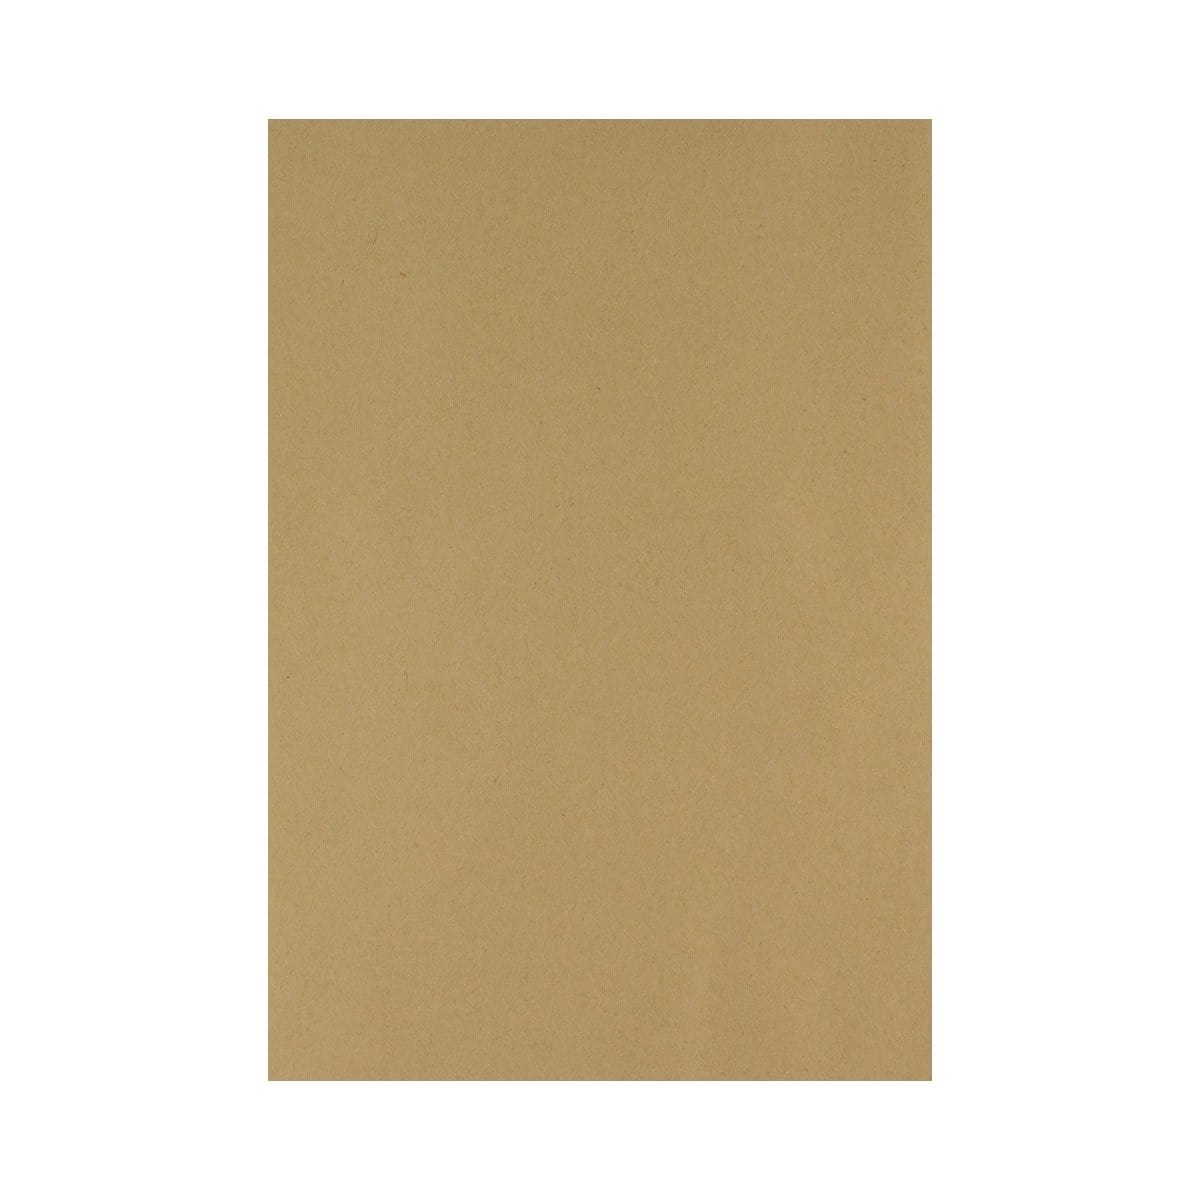 products/b4-manilla-gusset-envelopes1.jpg